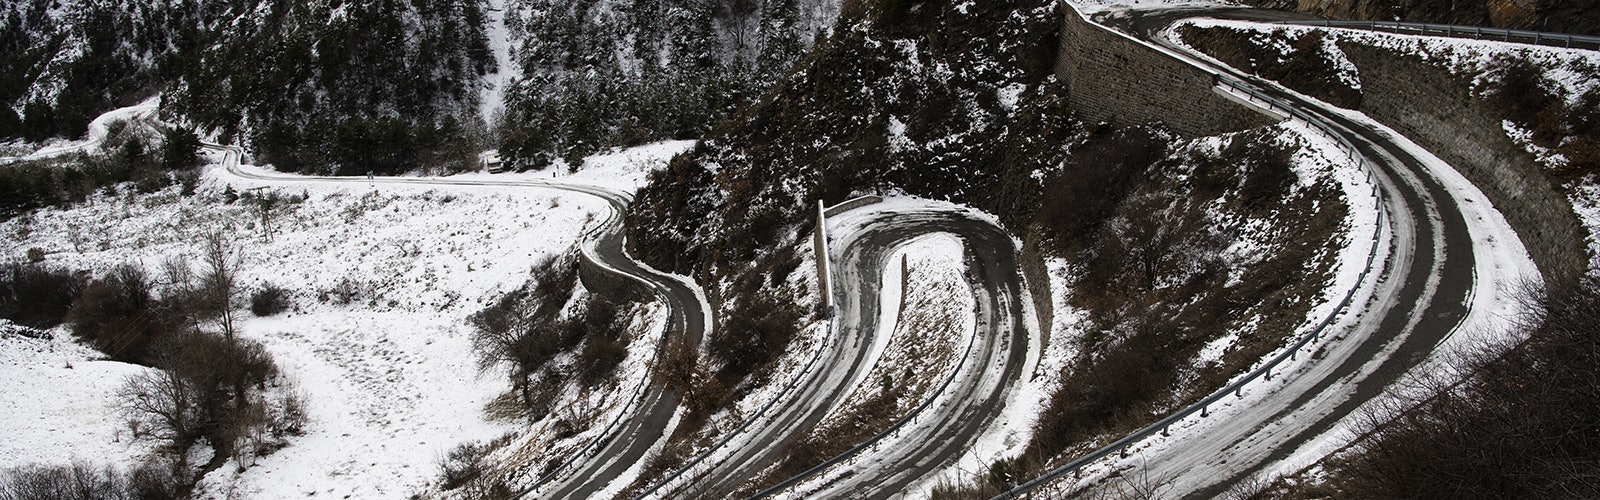 Monte Carlo Rally snow